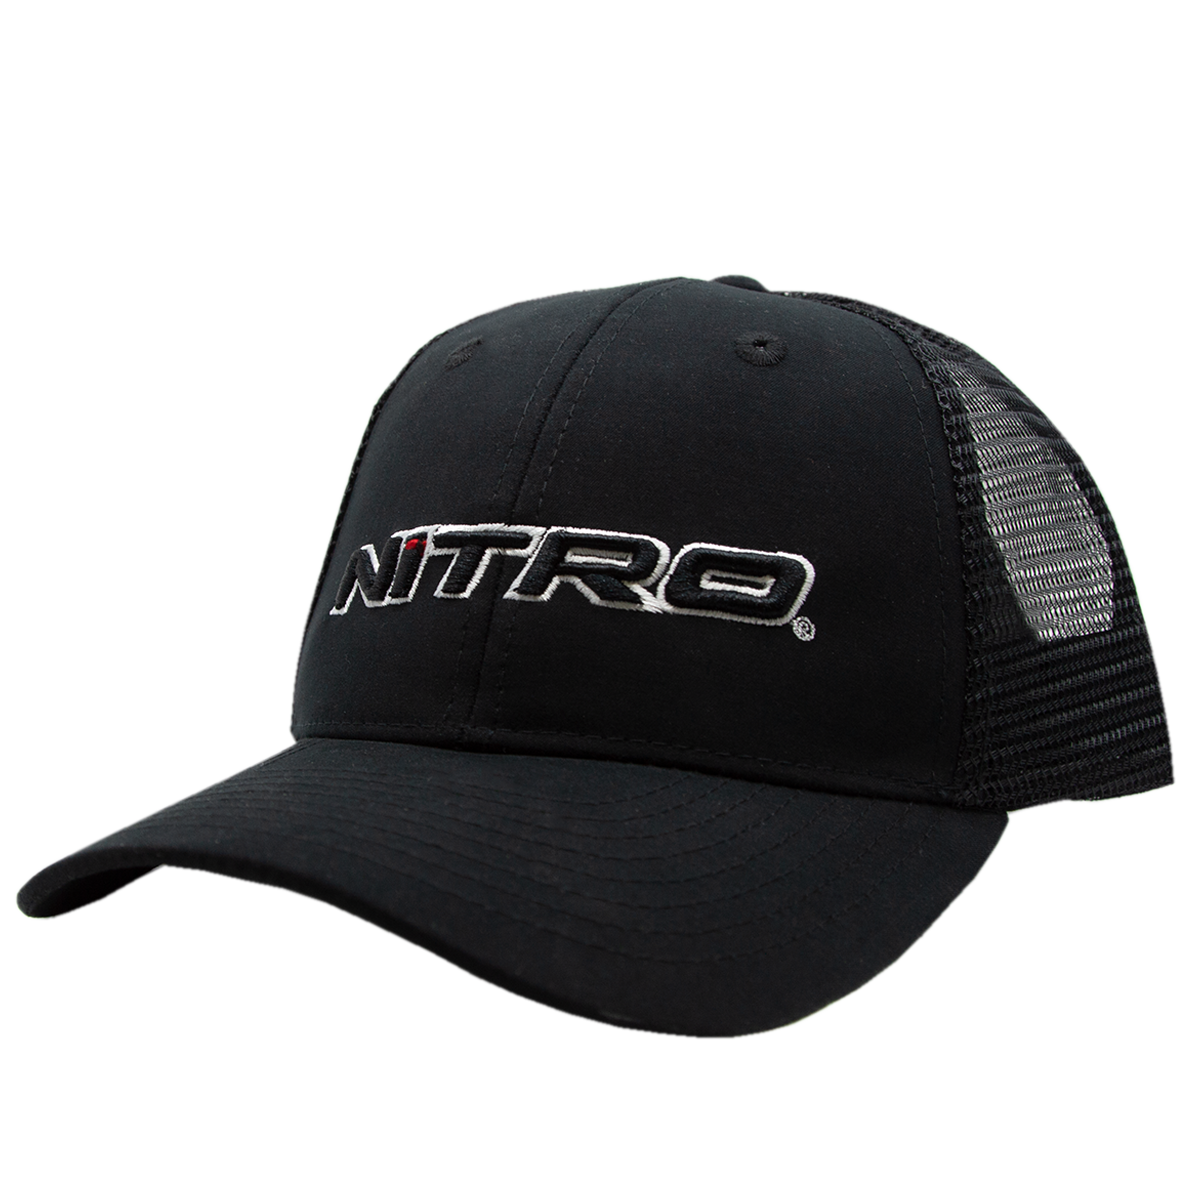 Nitro 26 - Black Cap - LaKota Products Dealer Portal